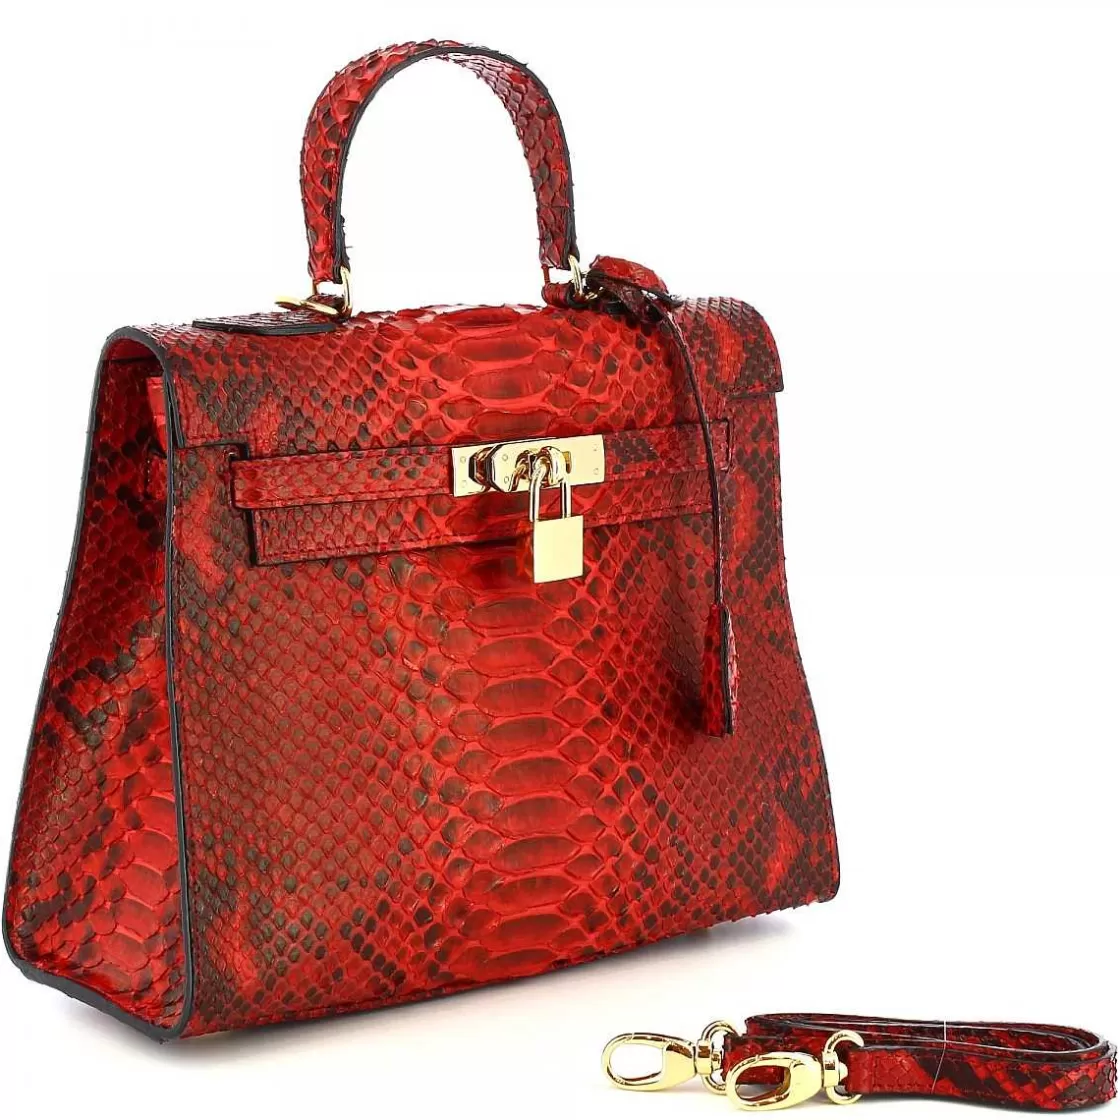 Leonardo Handmade Women'S Handbag With Shoulder Strap In Red Python Leather Discount